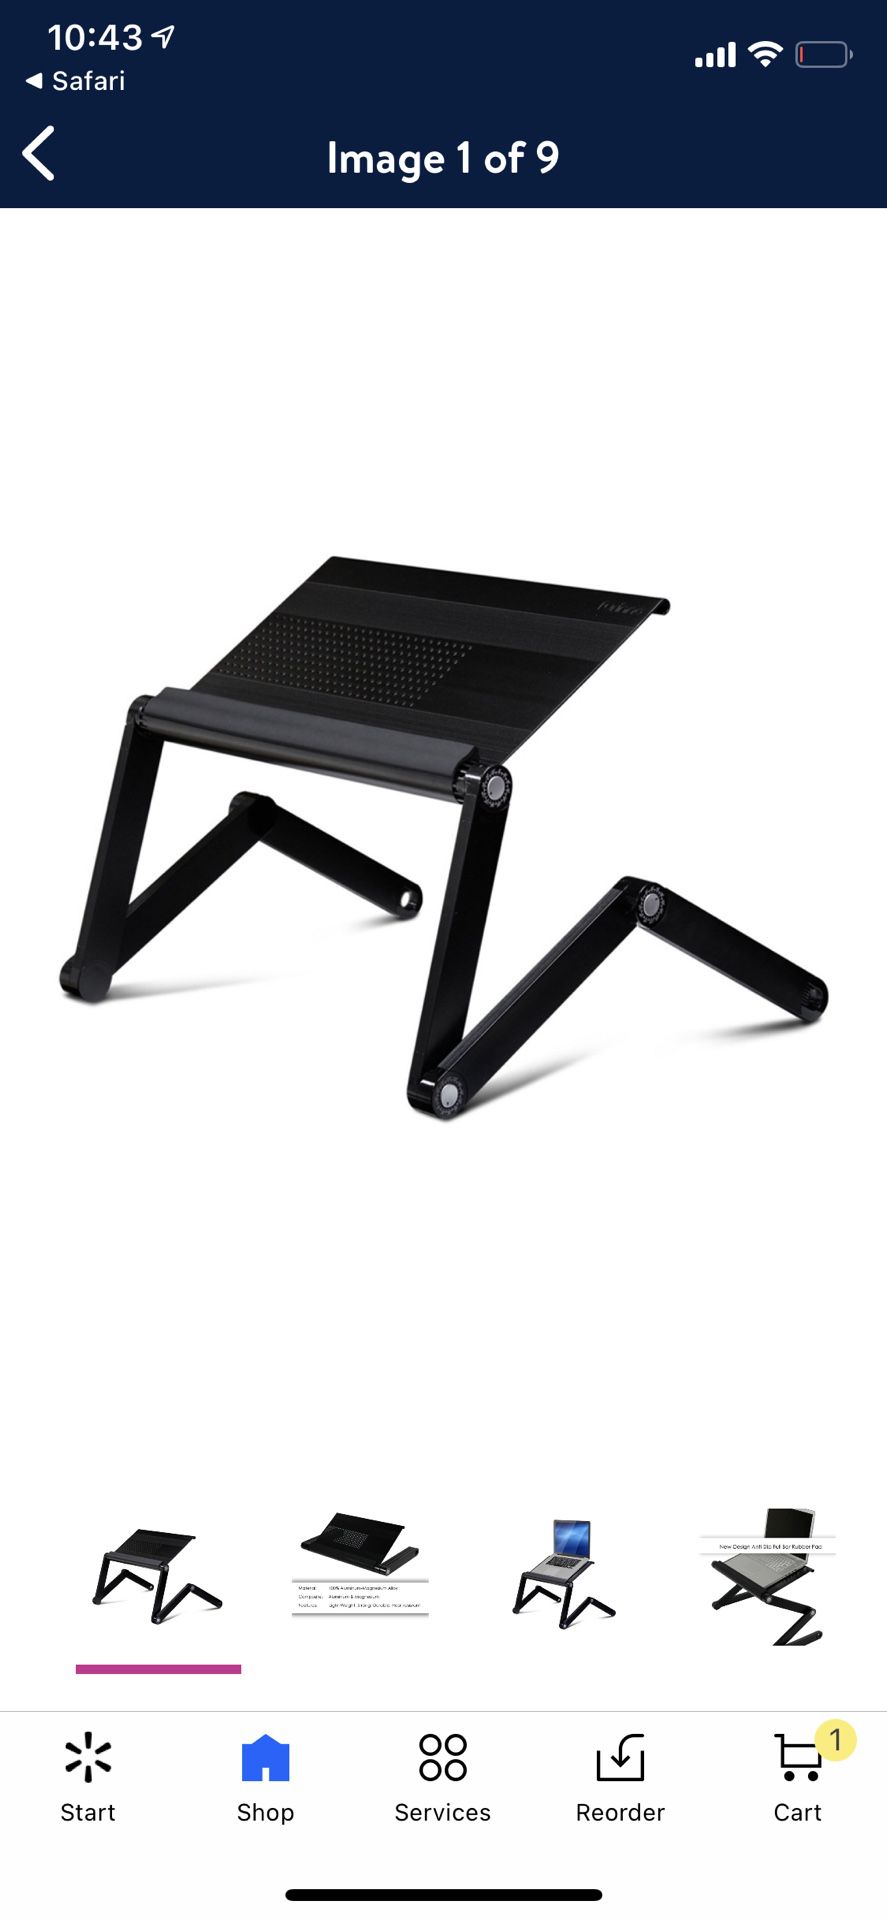 Furinno AdJustable Multi-functional Laptop Desk Portable Bed Tray